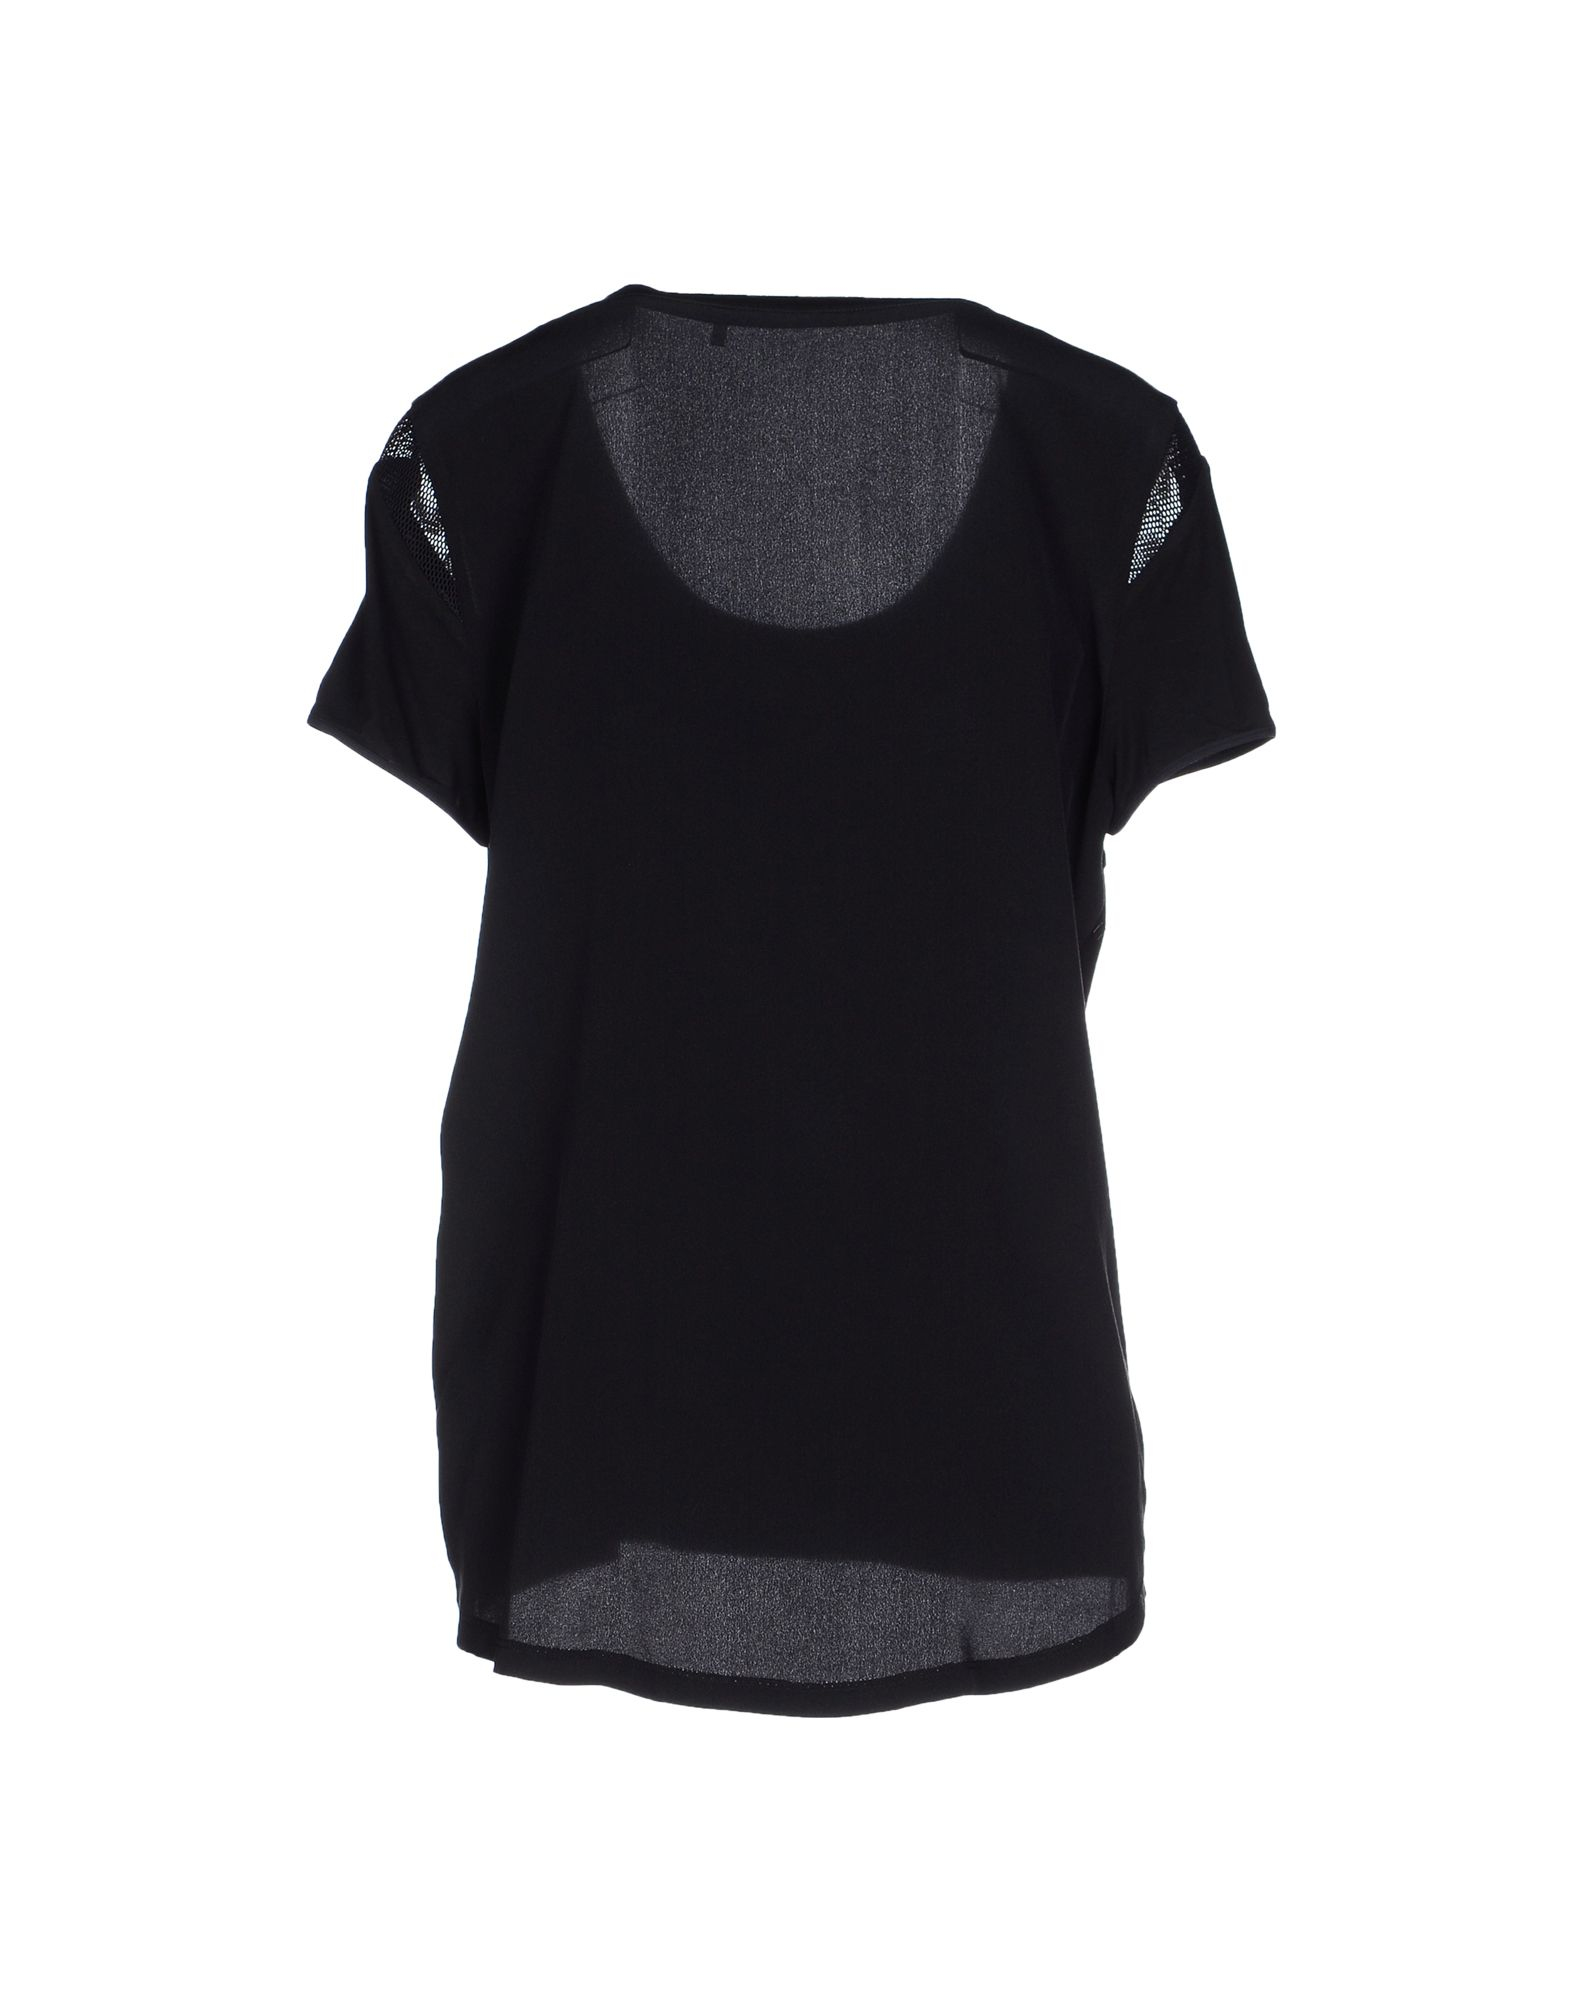 Lyst - Elie tahari T-shirt in Black